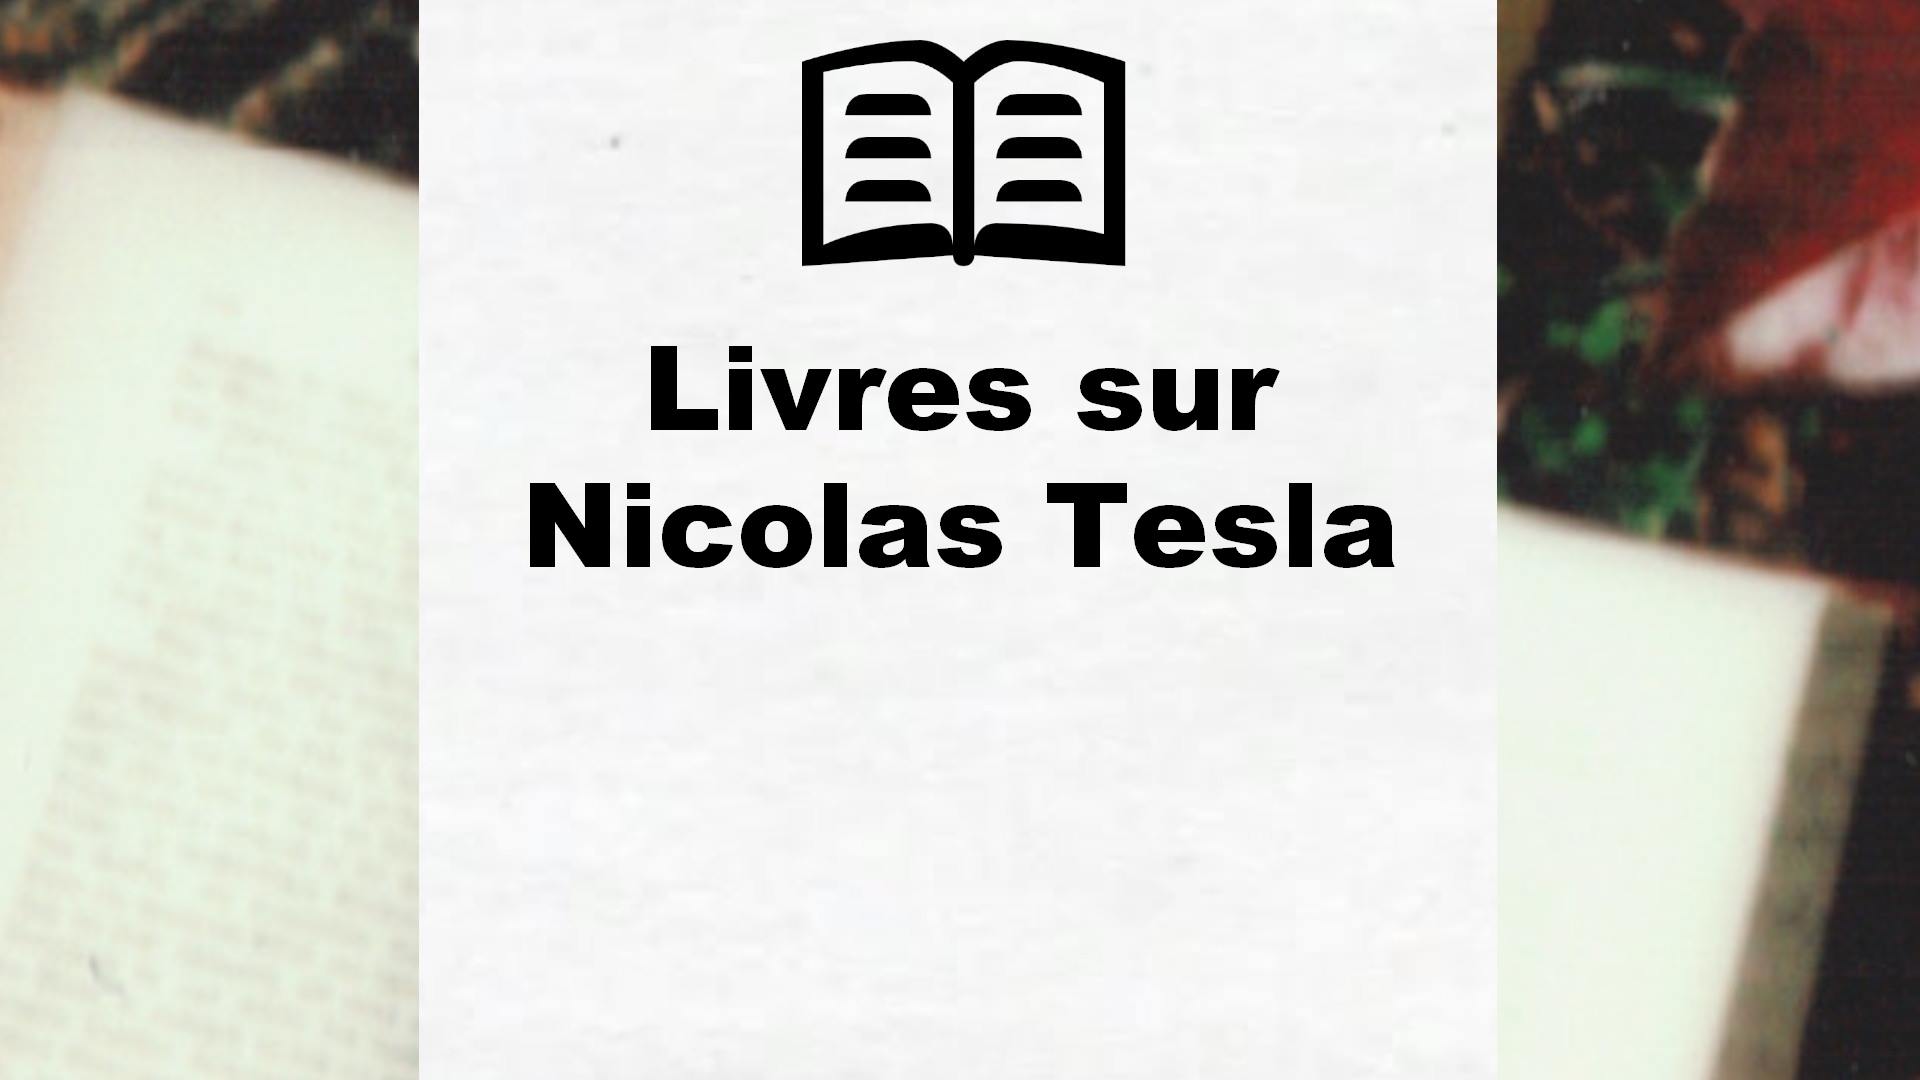 Livres sur Nicolas Tesla